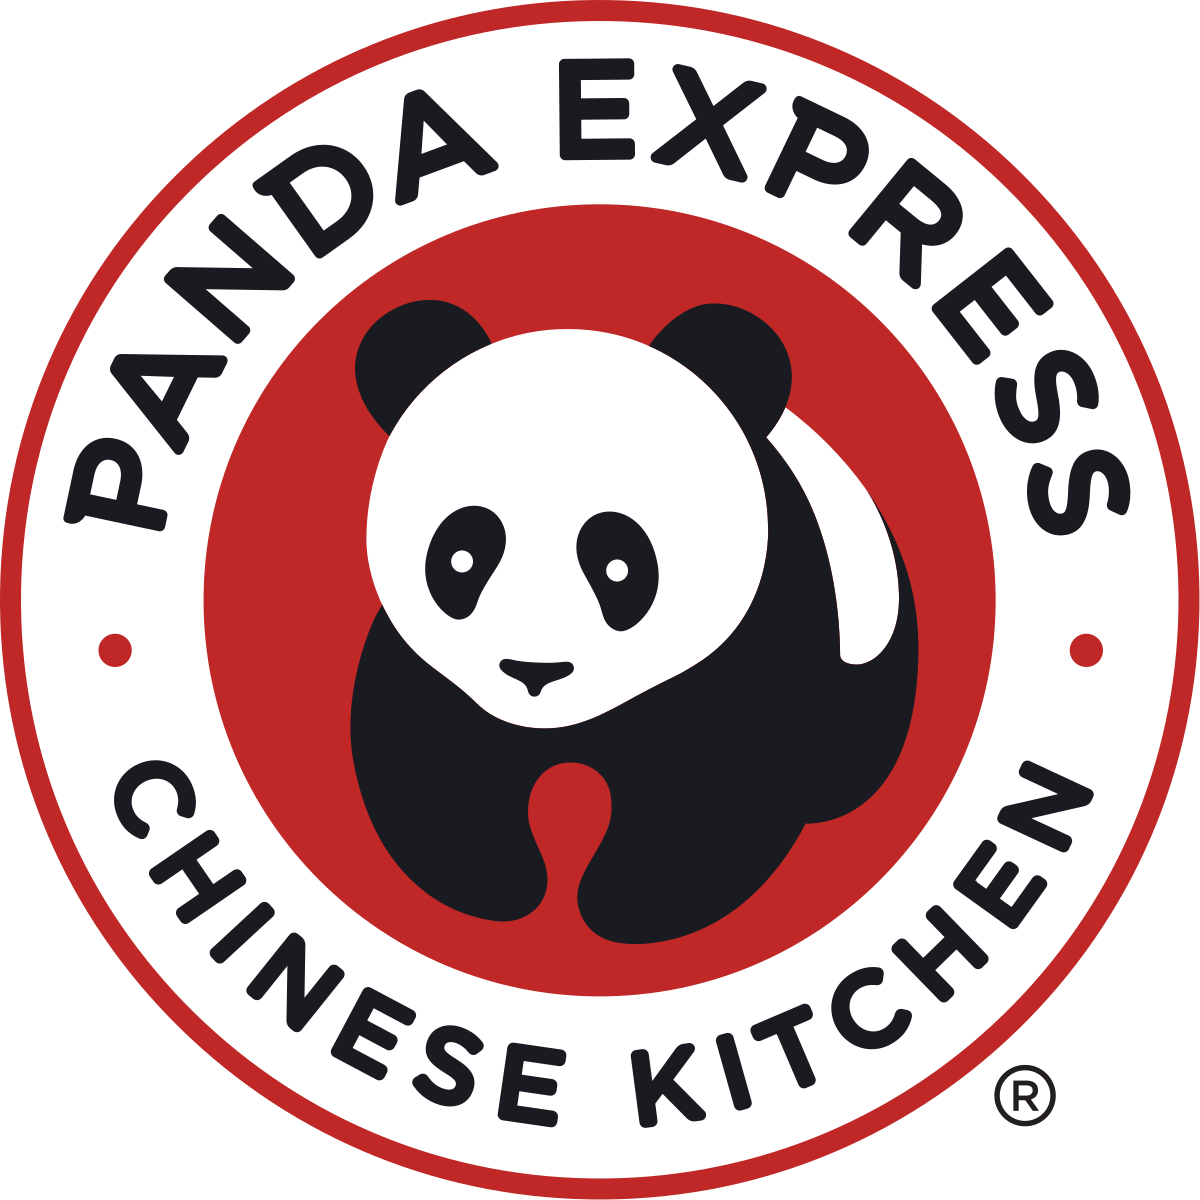 panda express menu